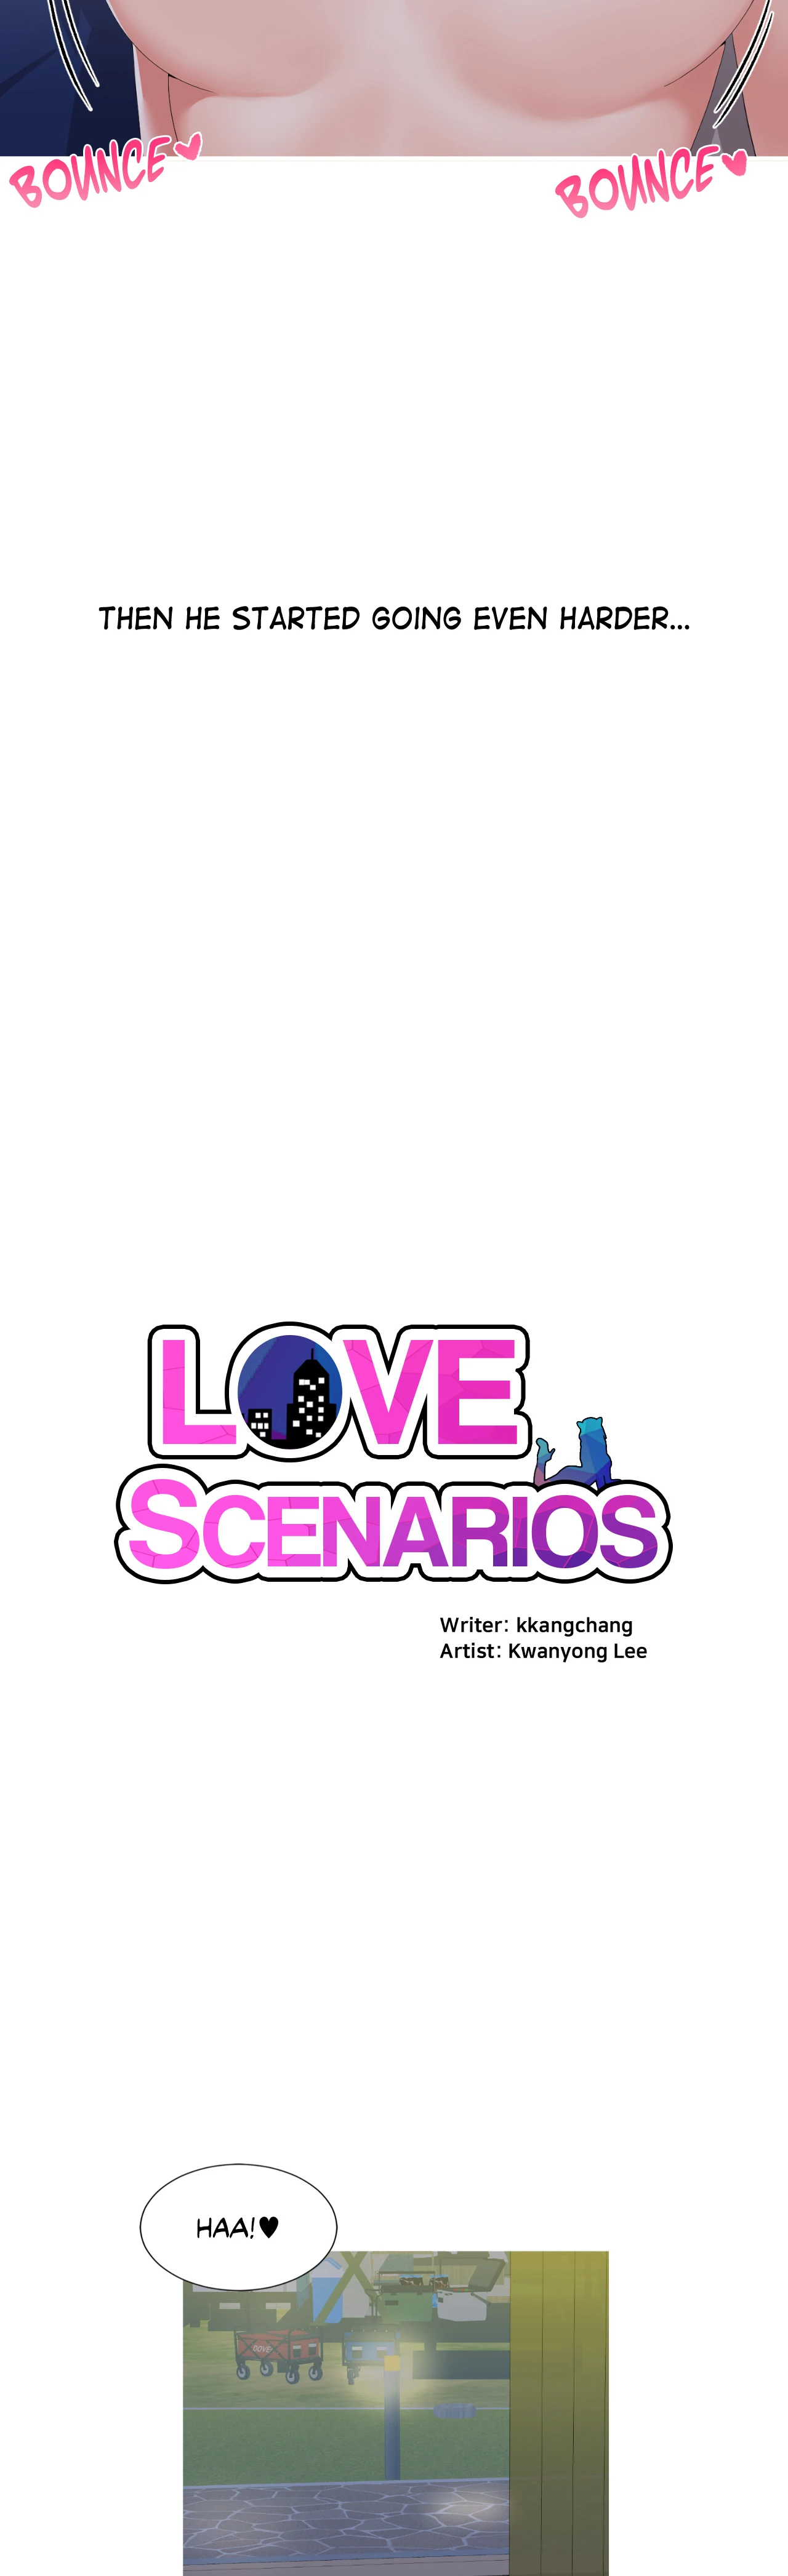 Love Scenarios NEW image